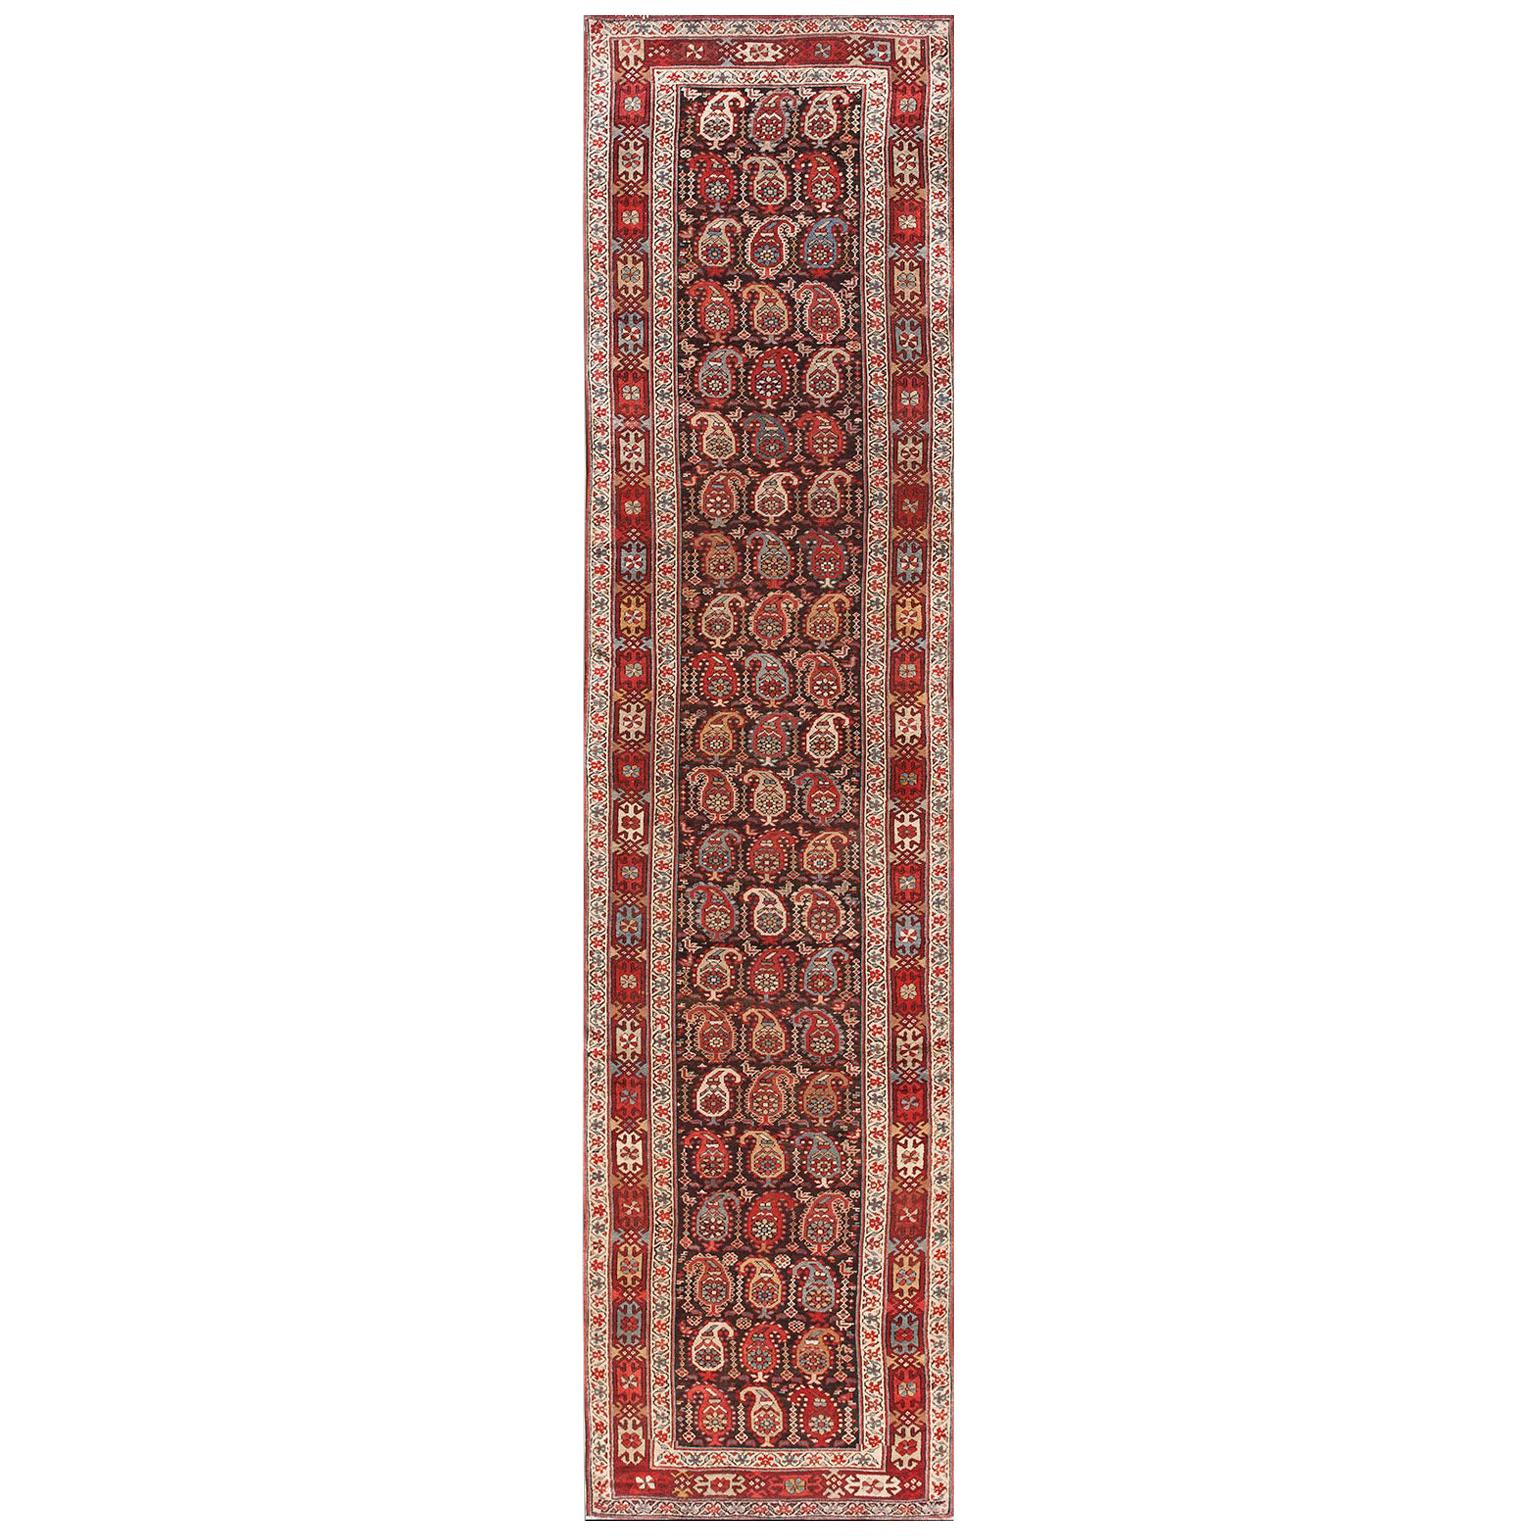 19th Century N.W. Persian Carpet ( 3'2" x 12'8" - 97 x 386 )